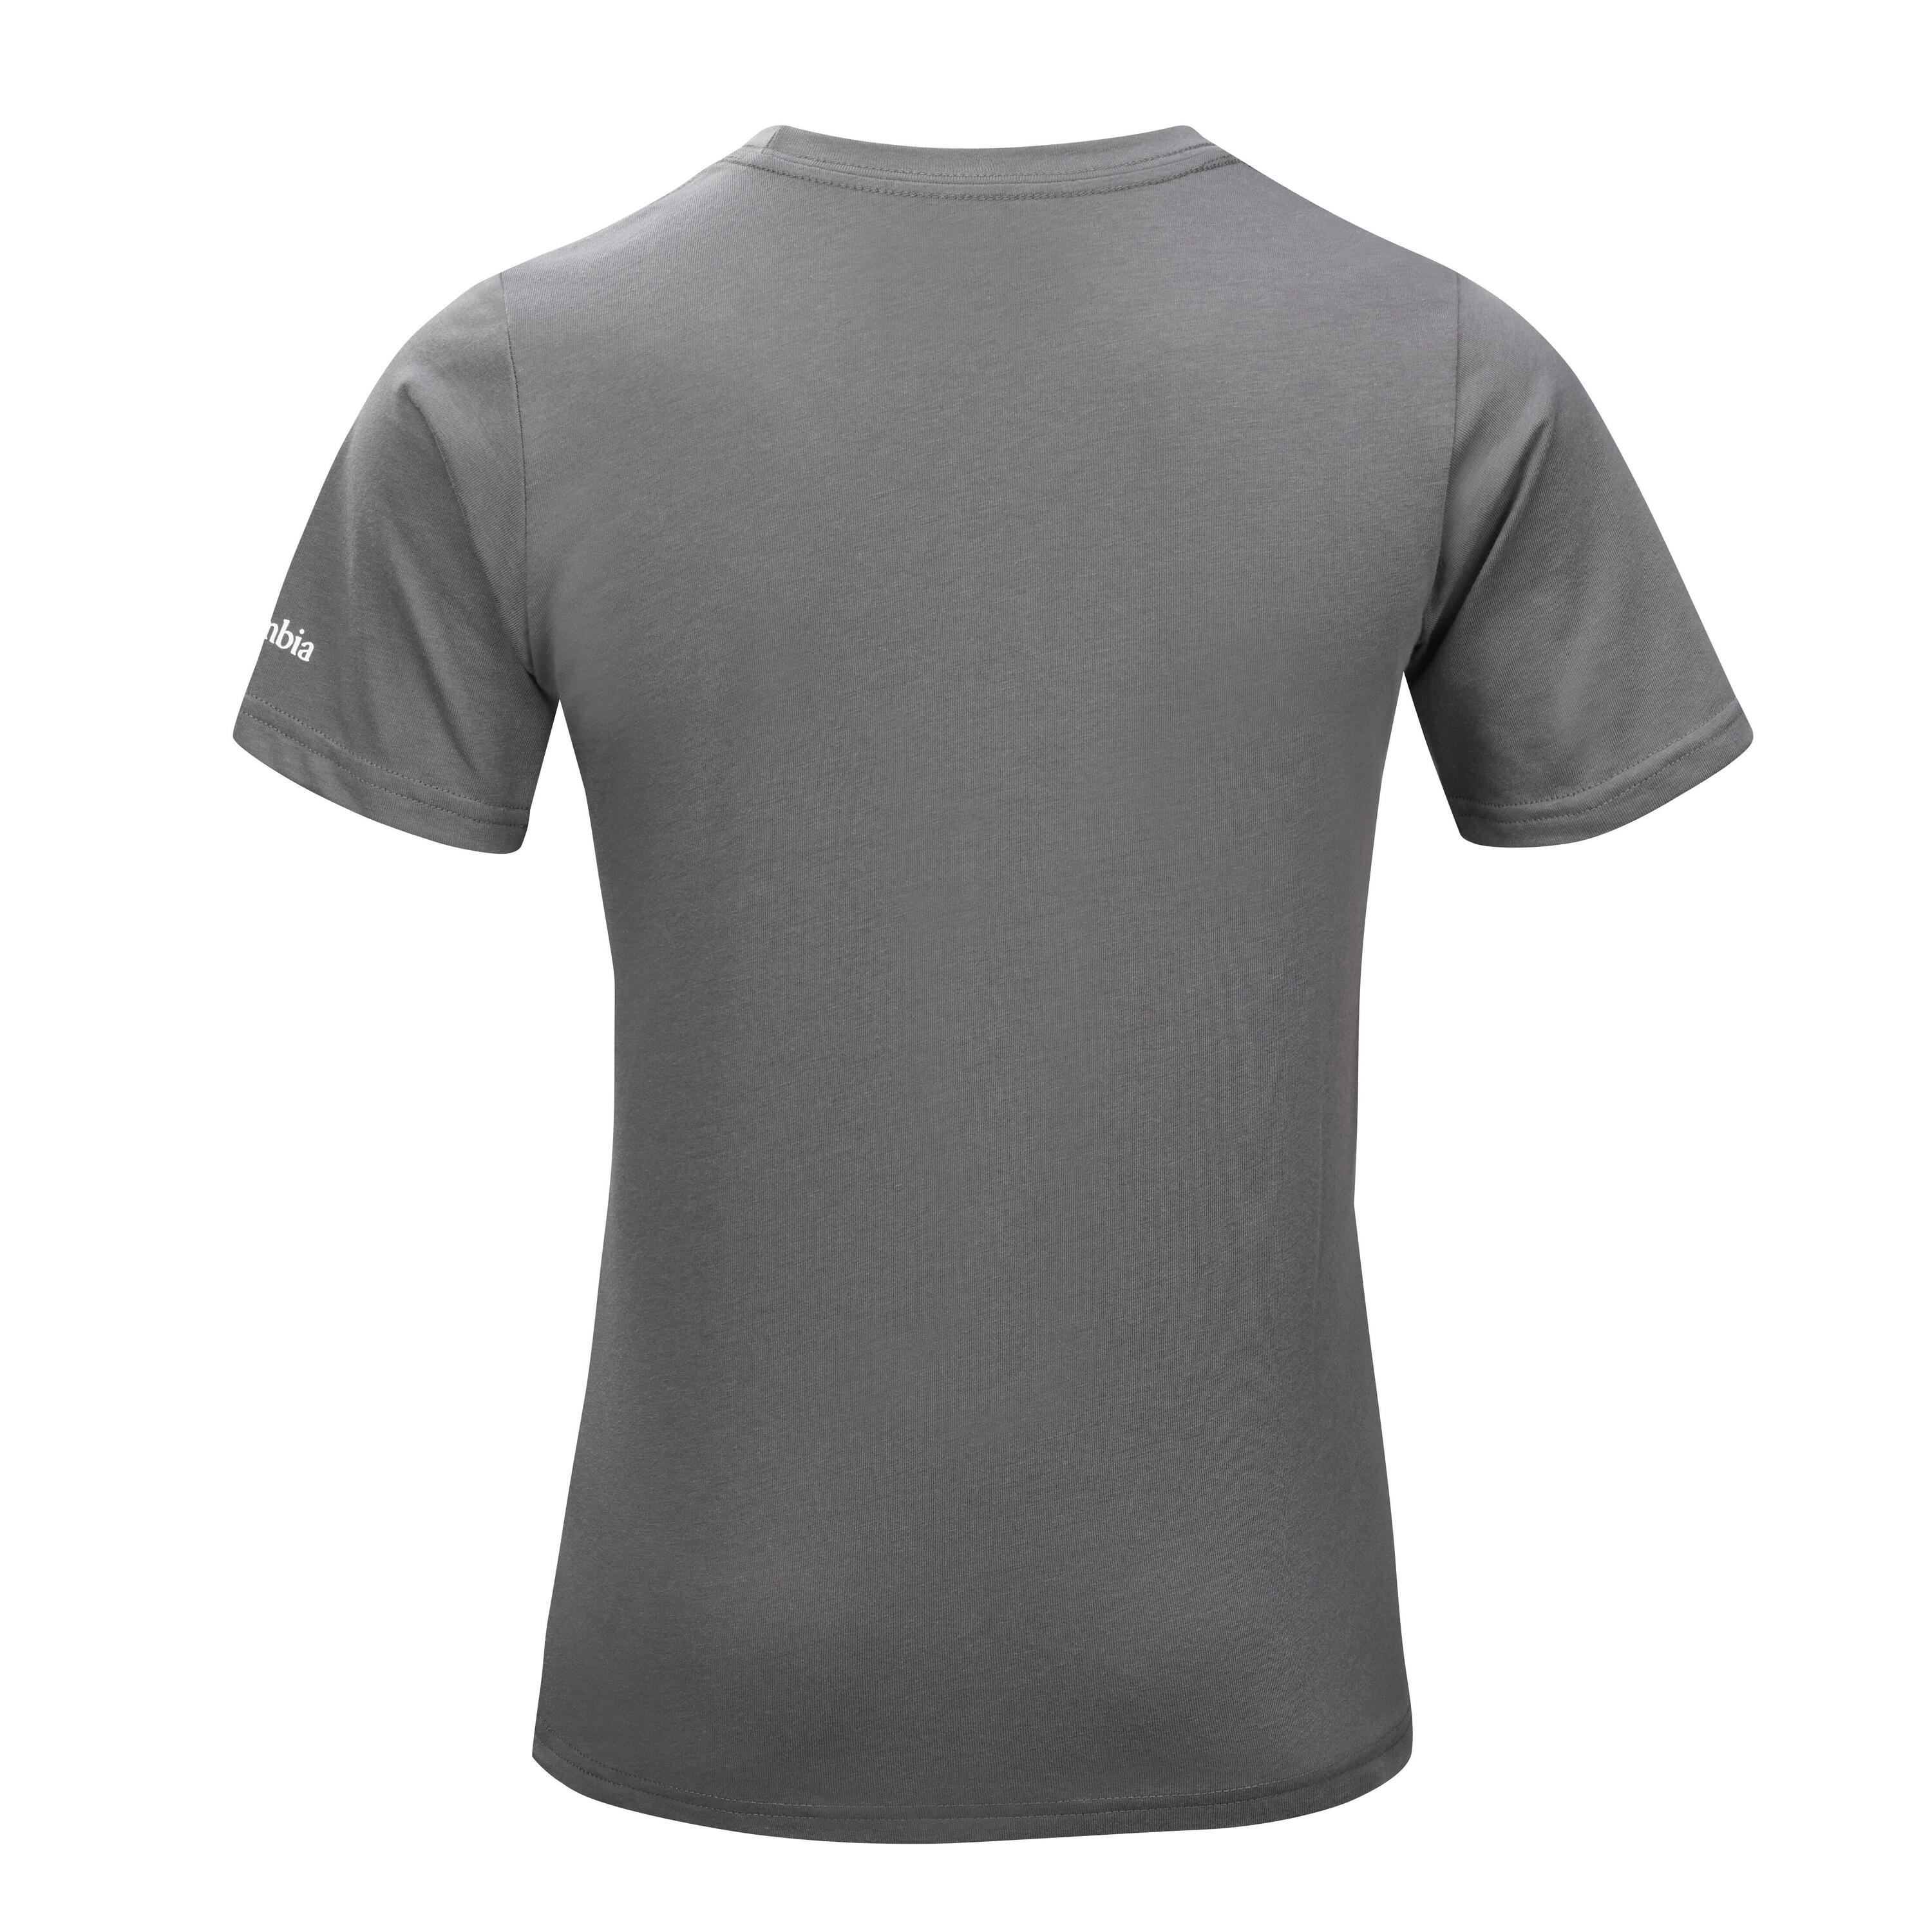 Kids' Hiking T-Shirt Columbia Tech Tee - 7 to 15 Years - grey 2/5